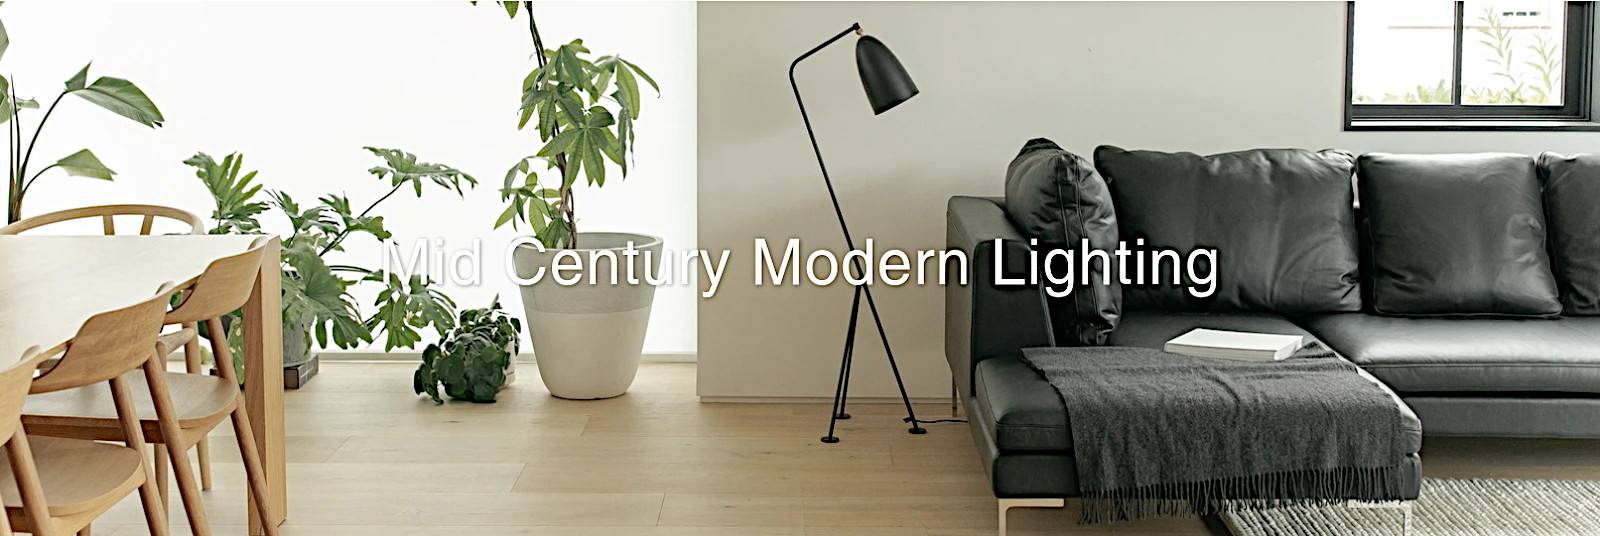 mid century modern lighting budget price